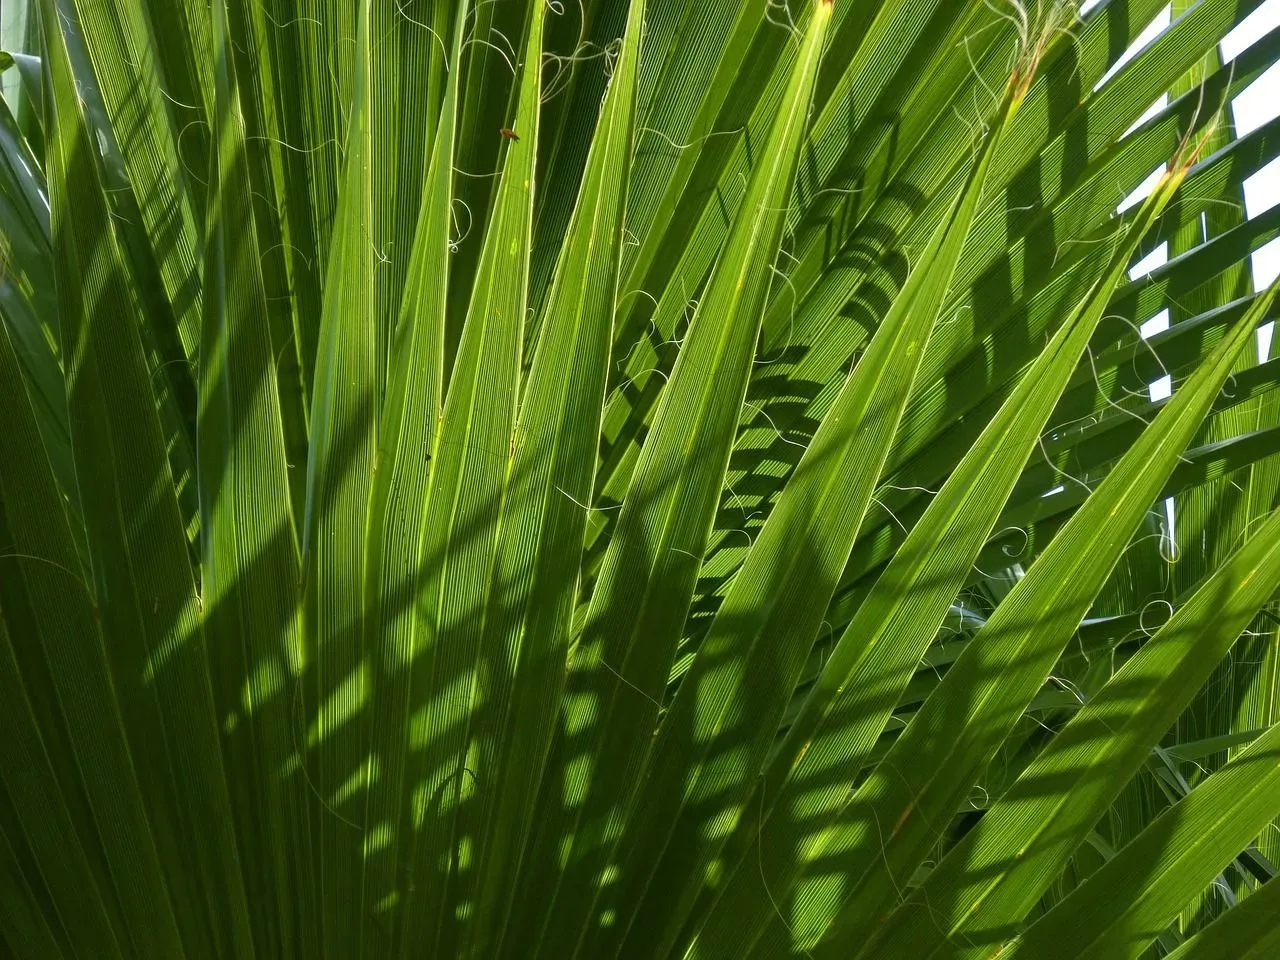 South Carolina's state flag portrays the palmetto plant.